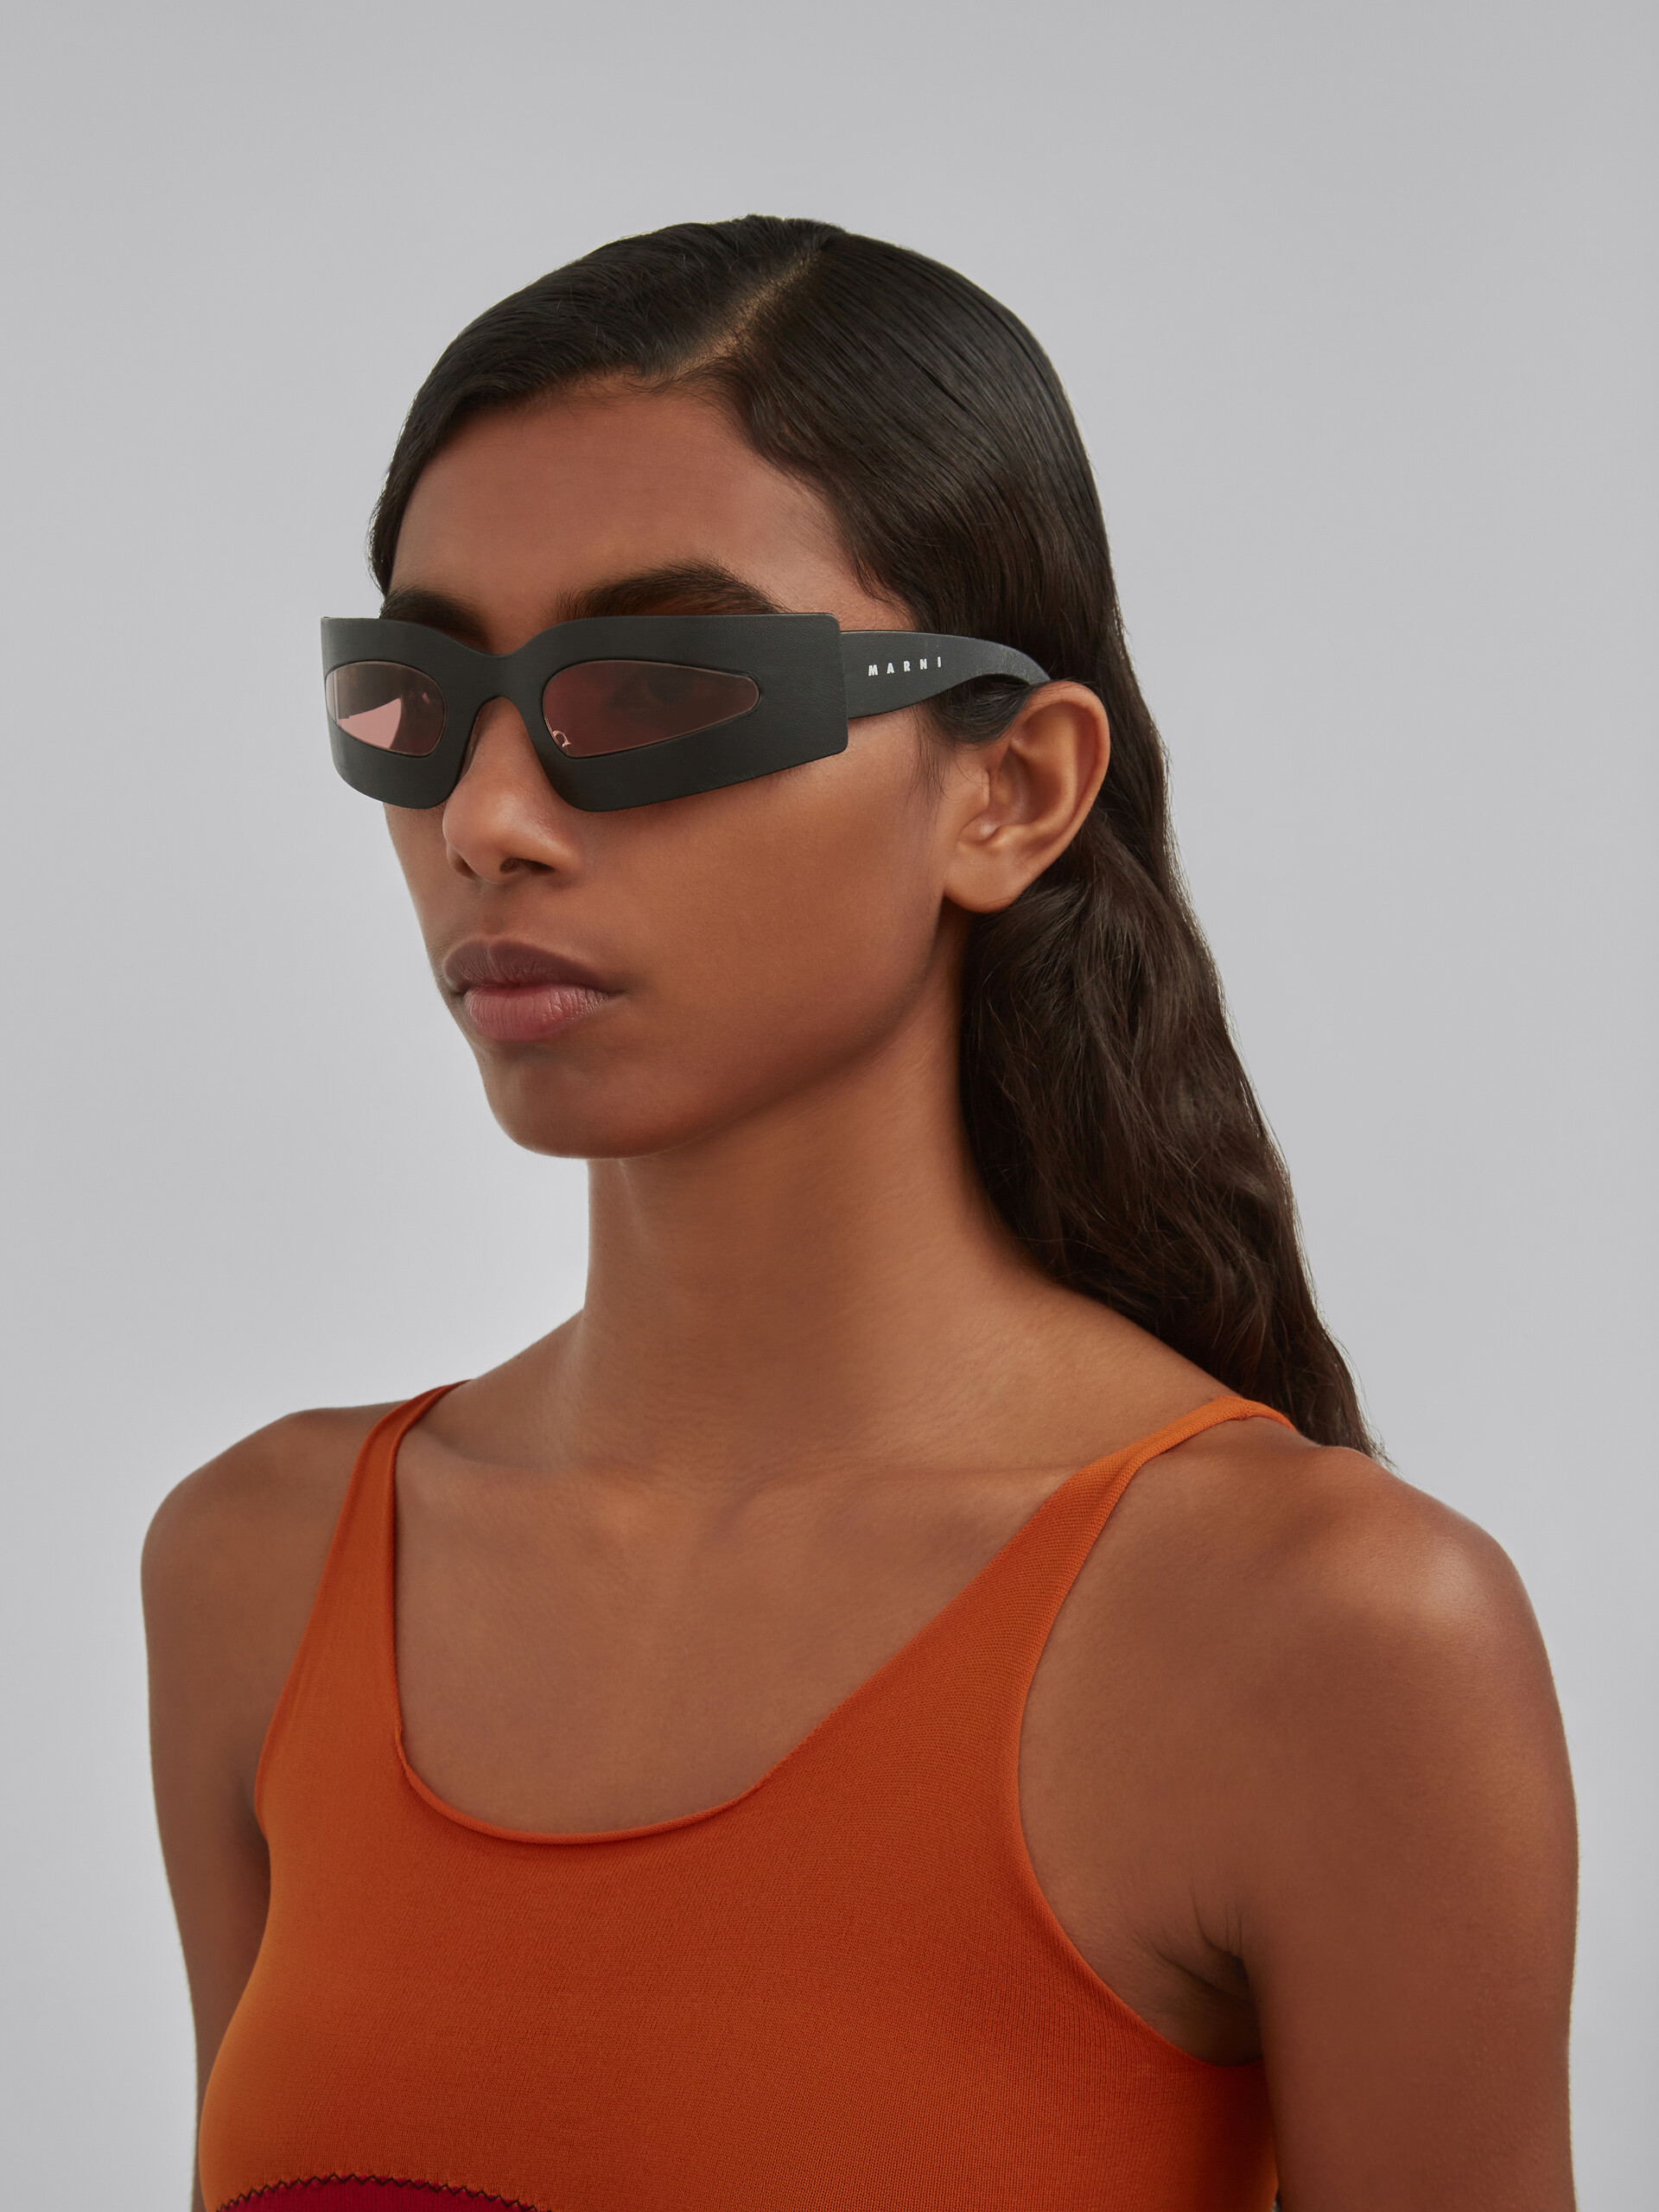 Yuma black leather sunglasses - Optical - Image 1